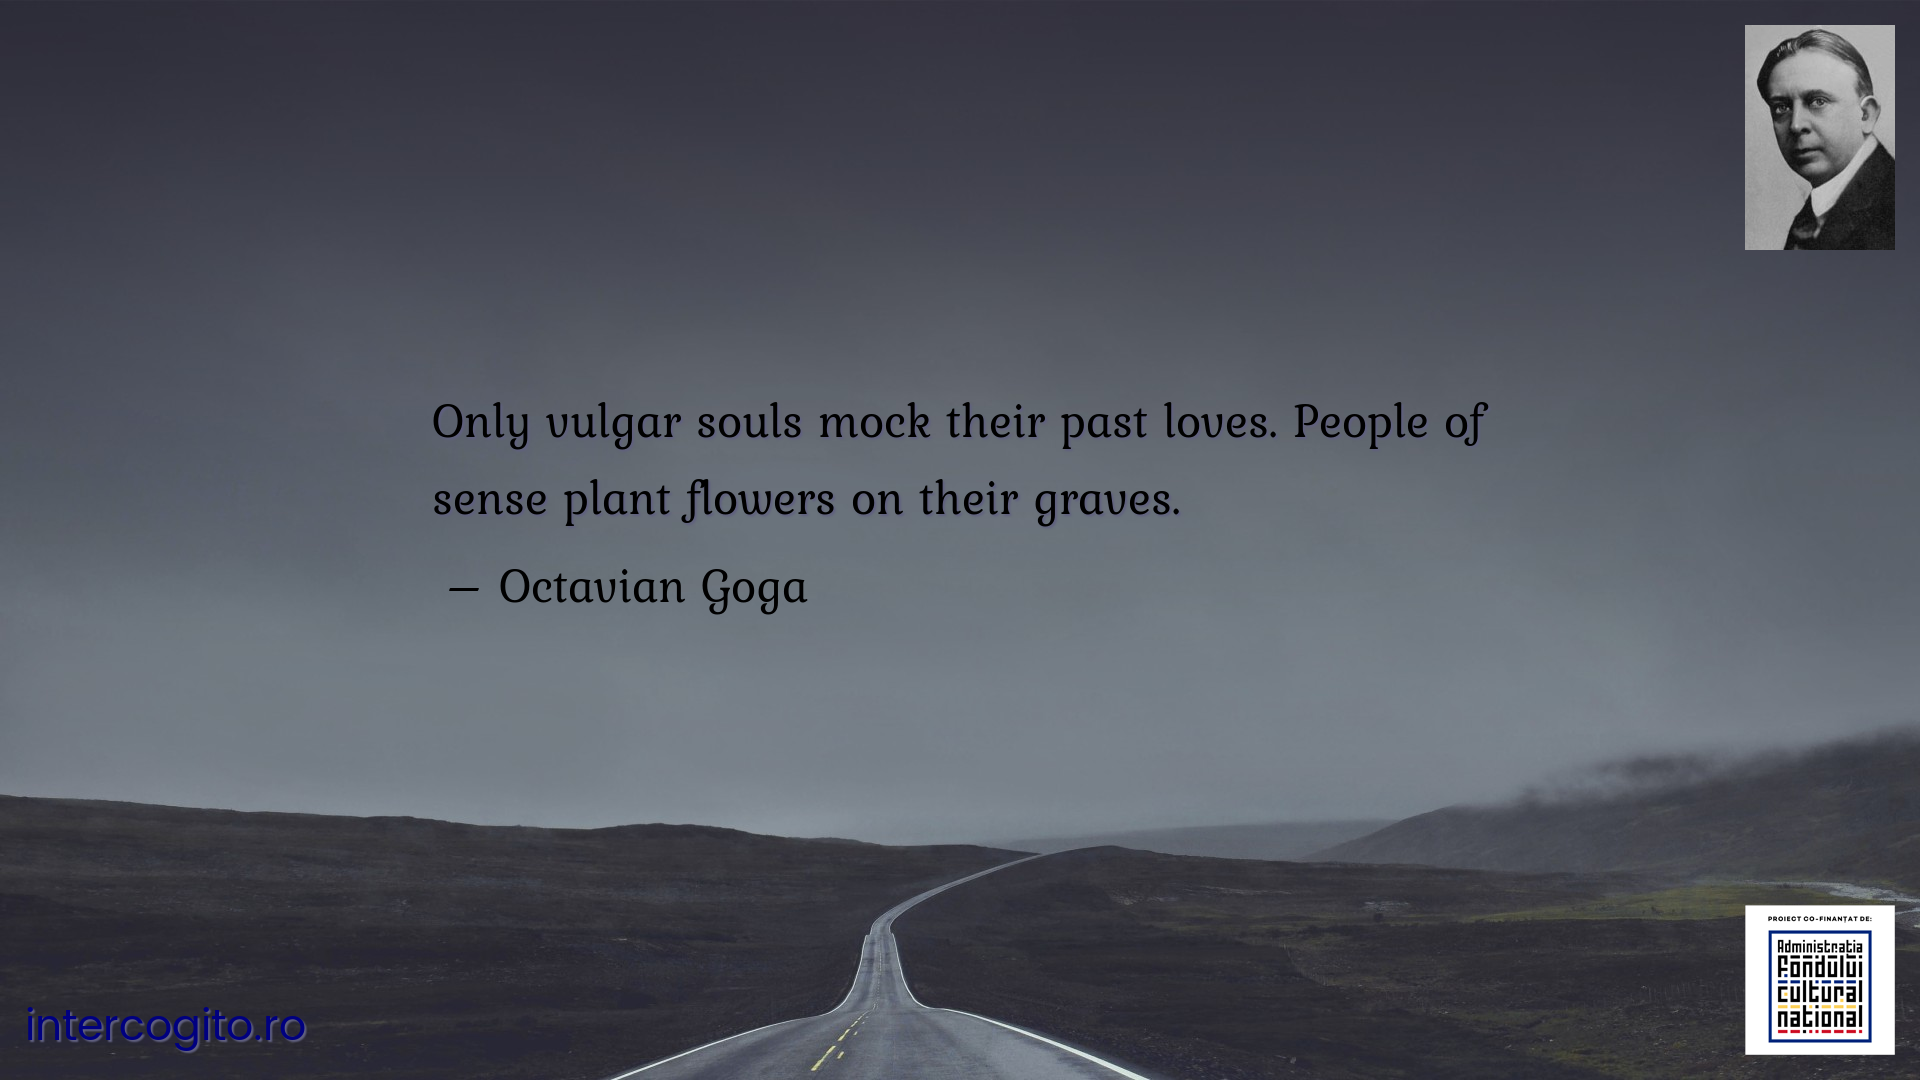 Only vulgar souls mock their past loves. People of sense plant flowers on their graves.